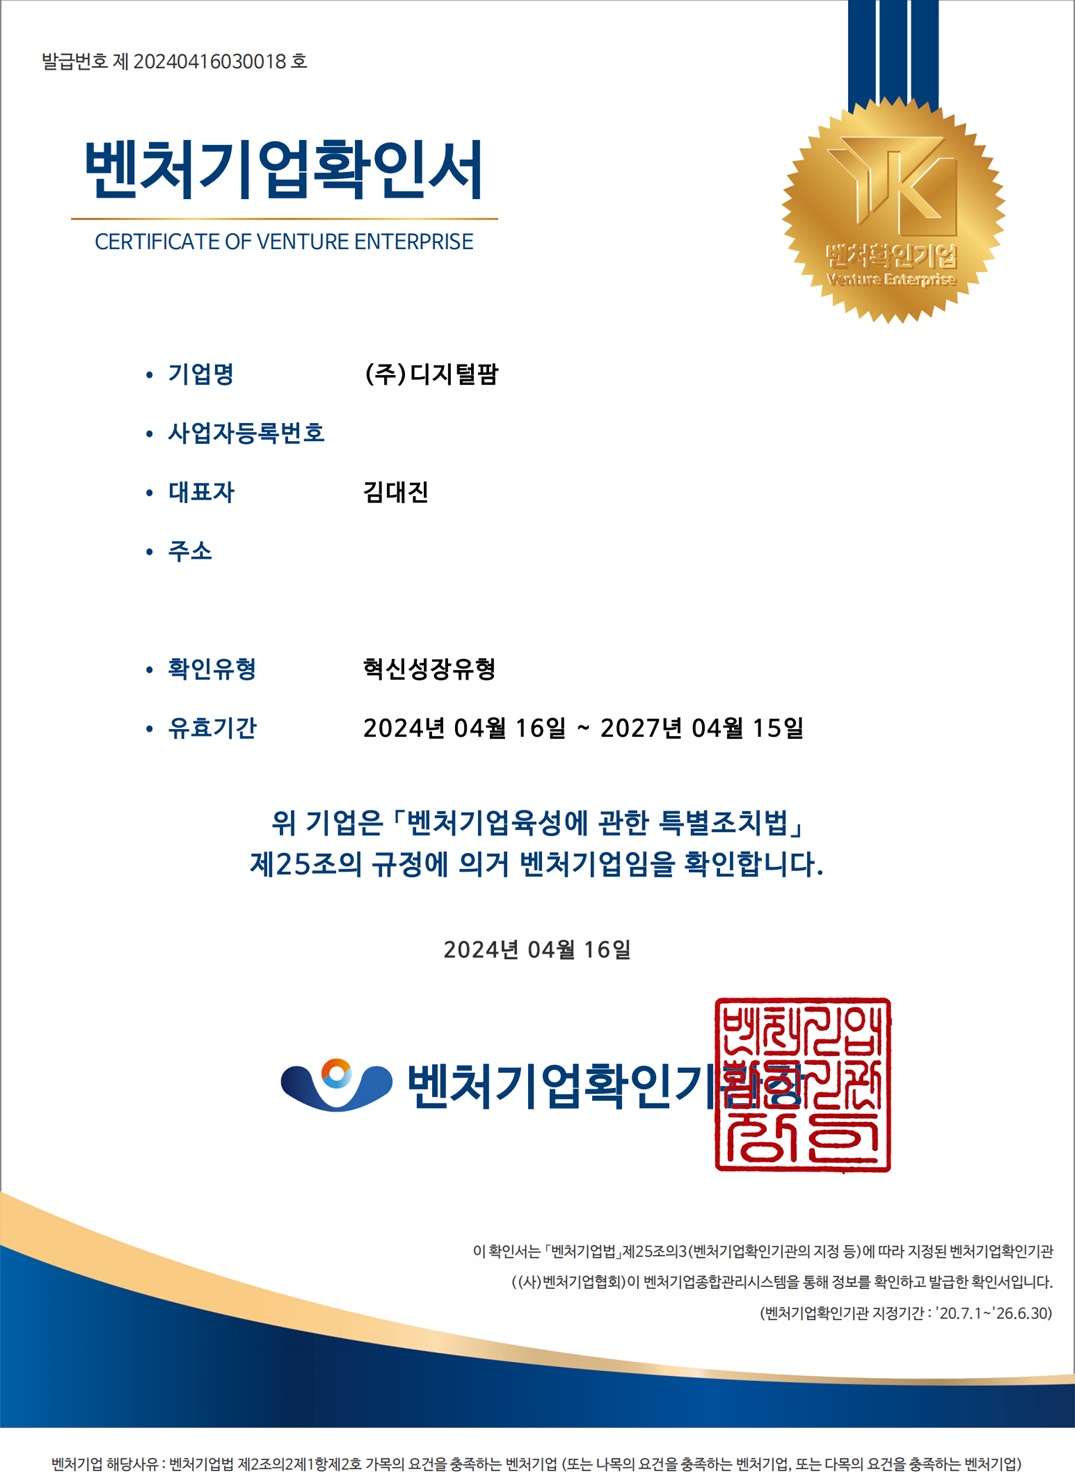 certificate of venture enterprise.jpg